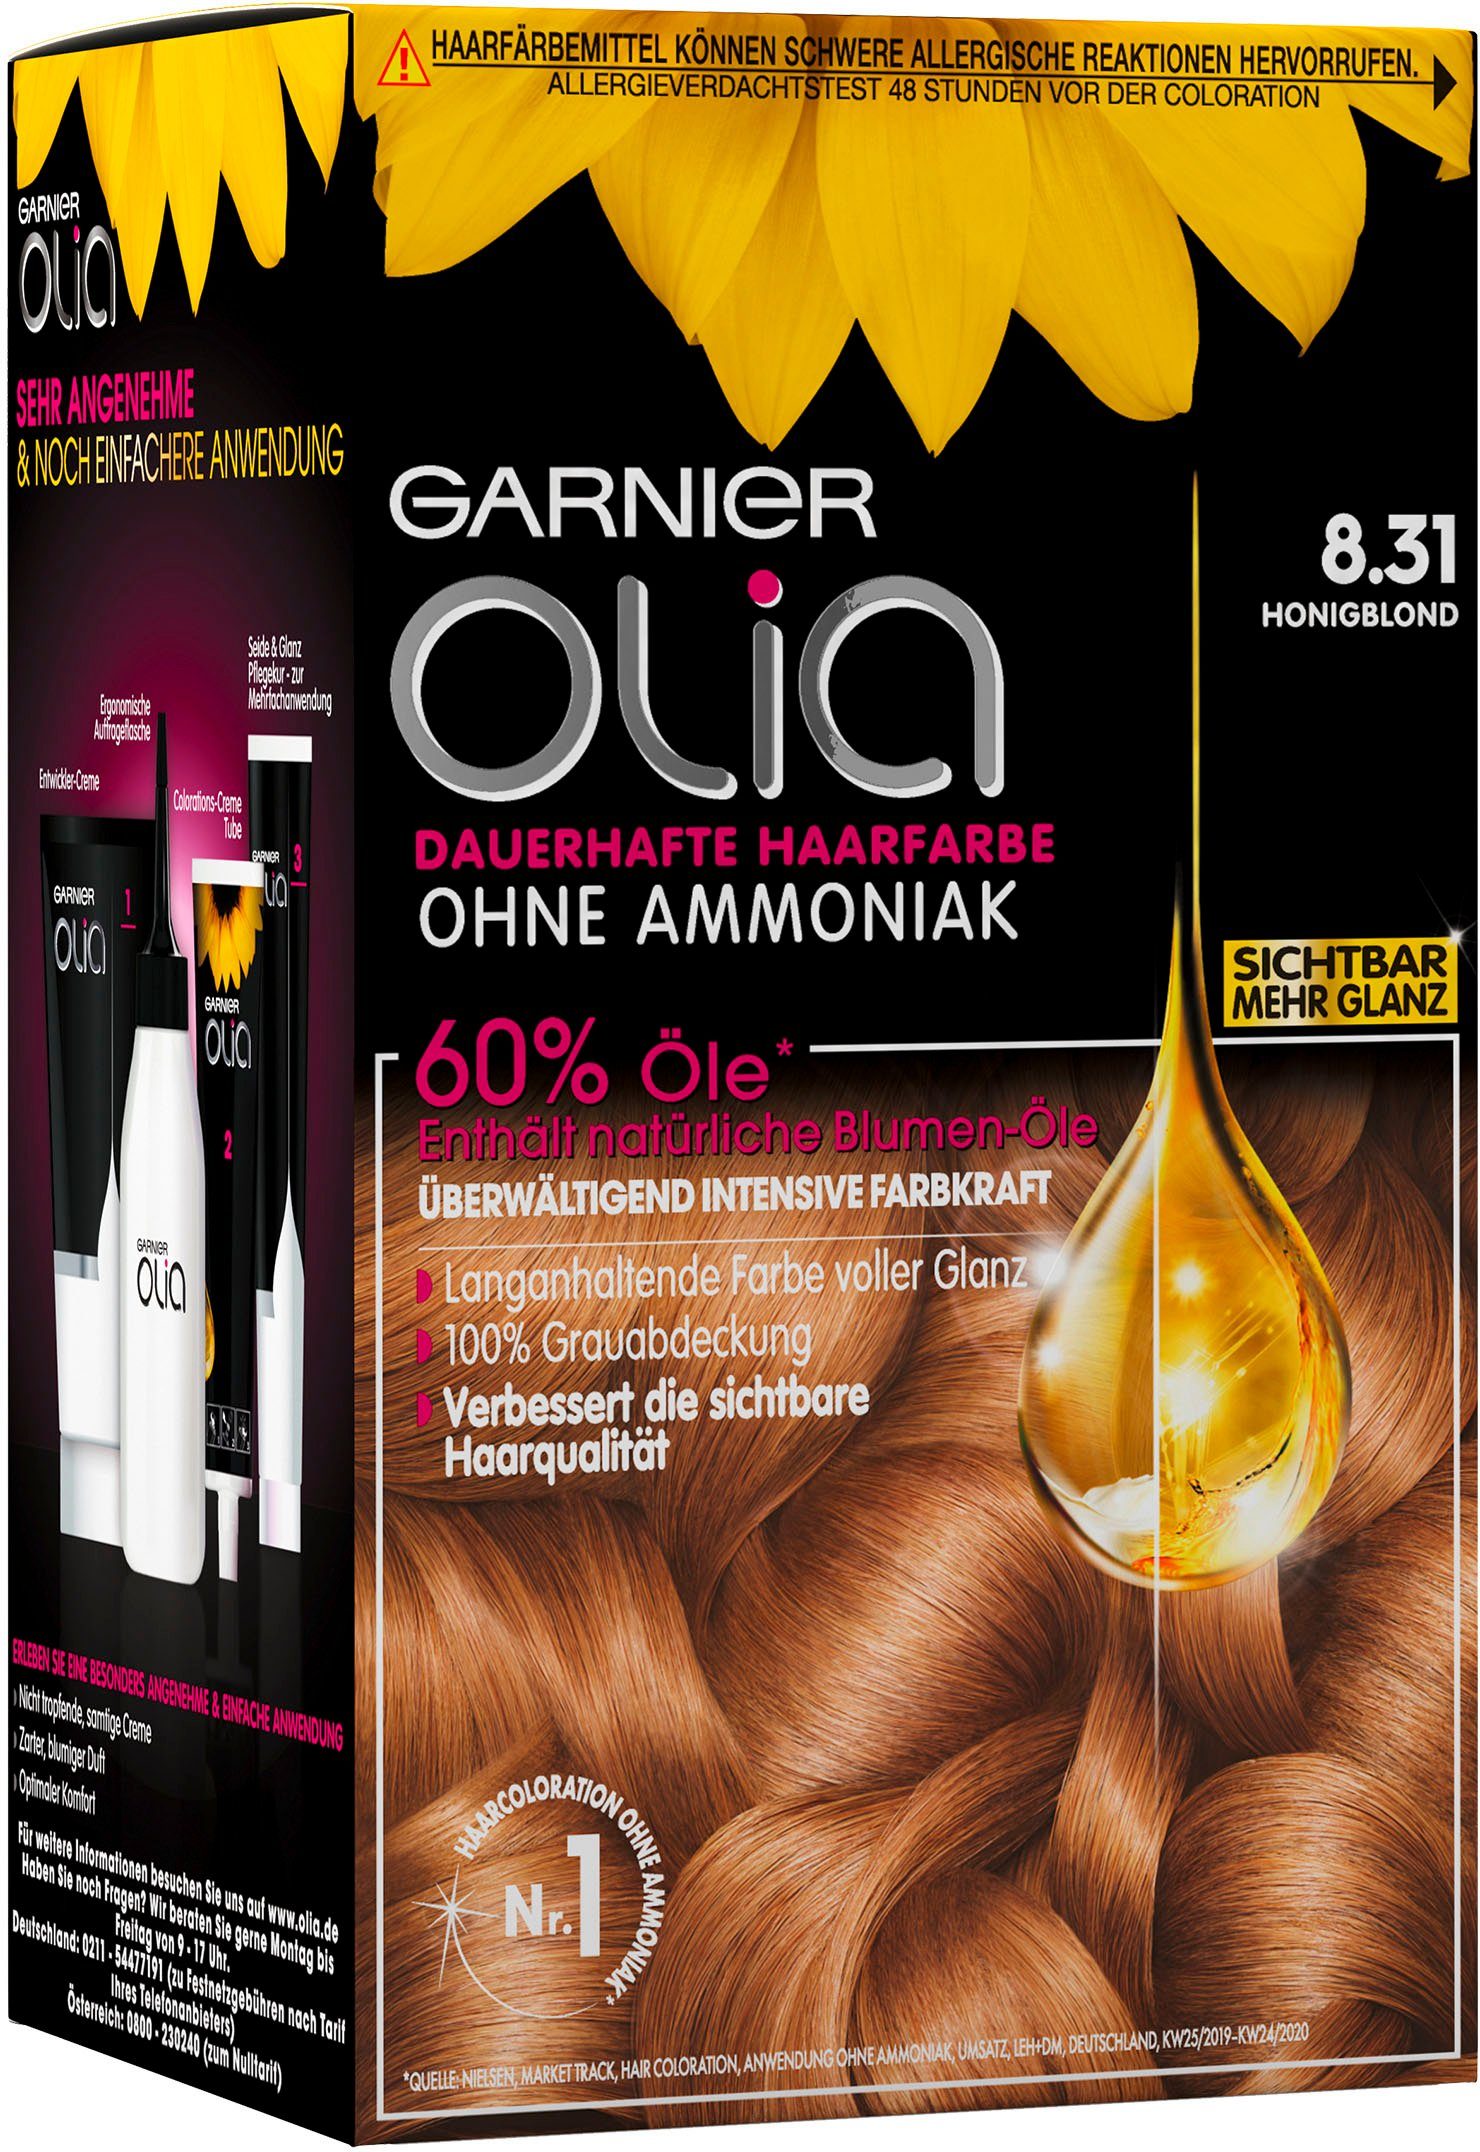 Honigblond Olia 8.31 GARNIER dauerhafte Coloration Haarfarbe